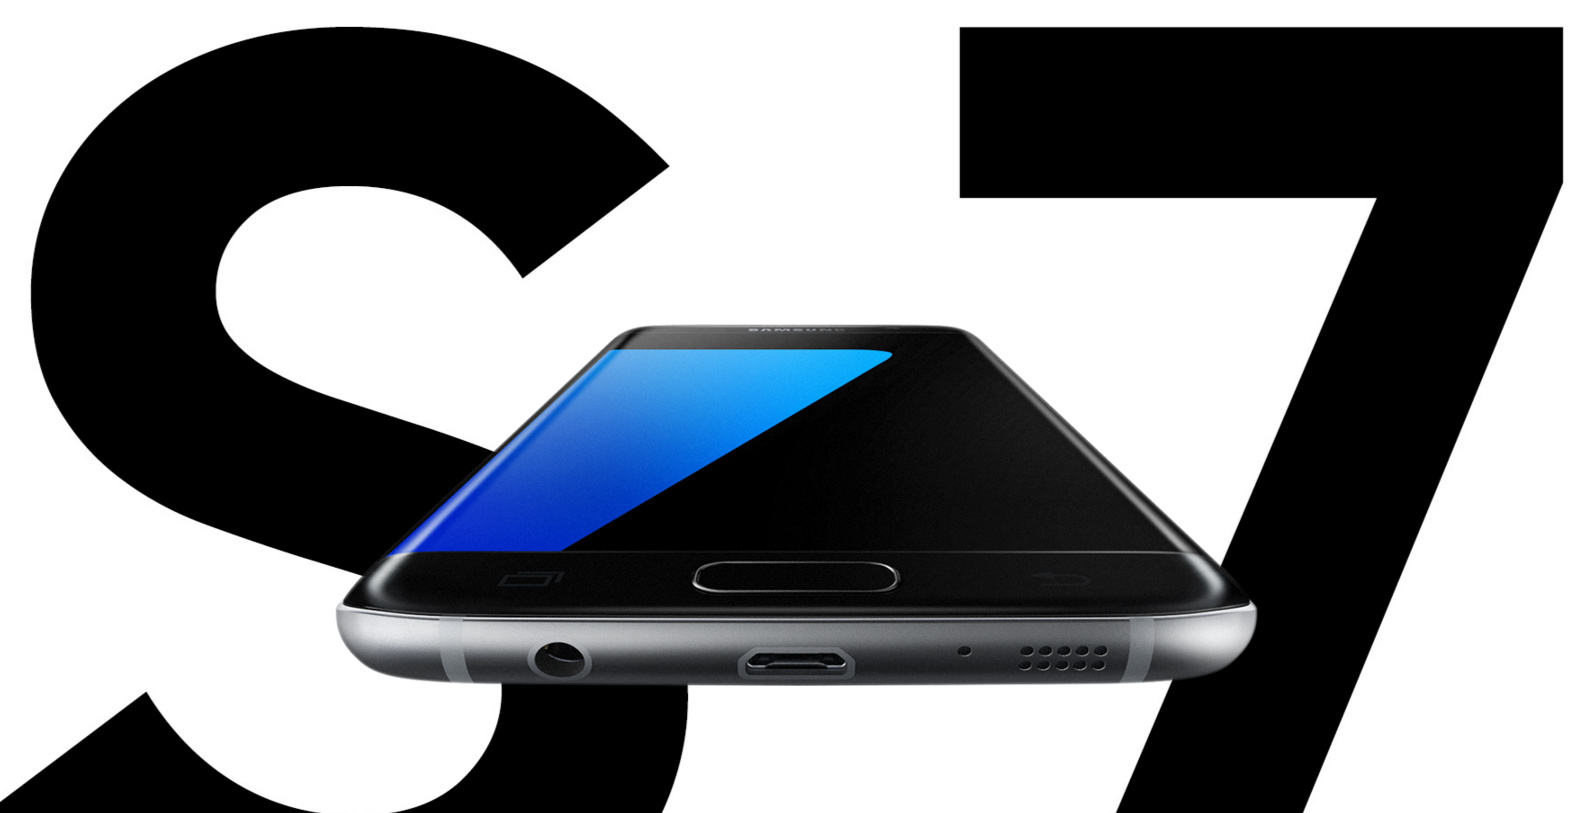 Samsung Galaxy S7 and S7 Edge 12